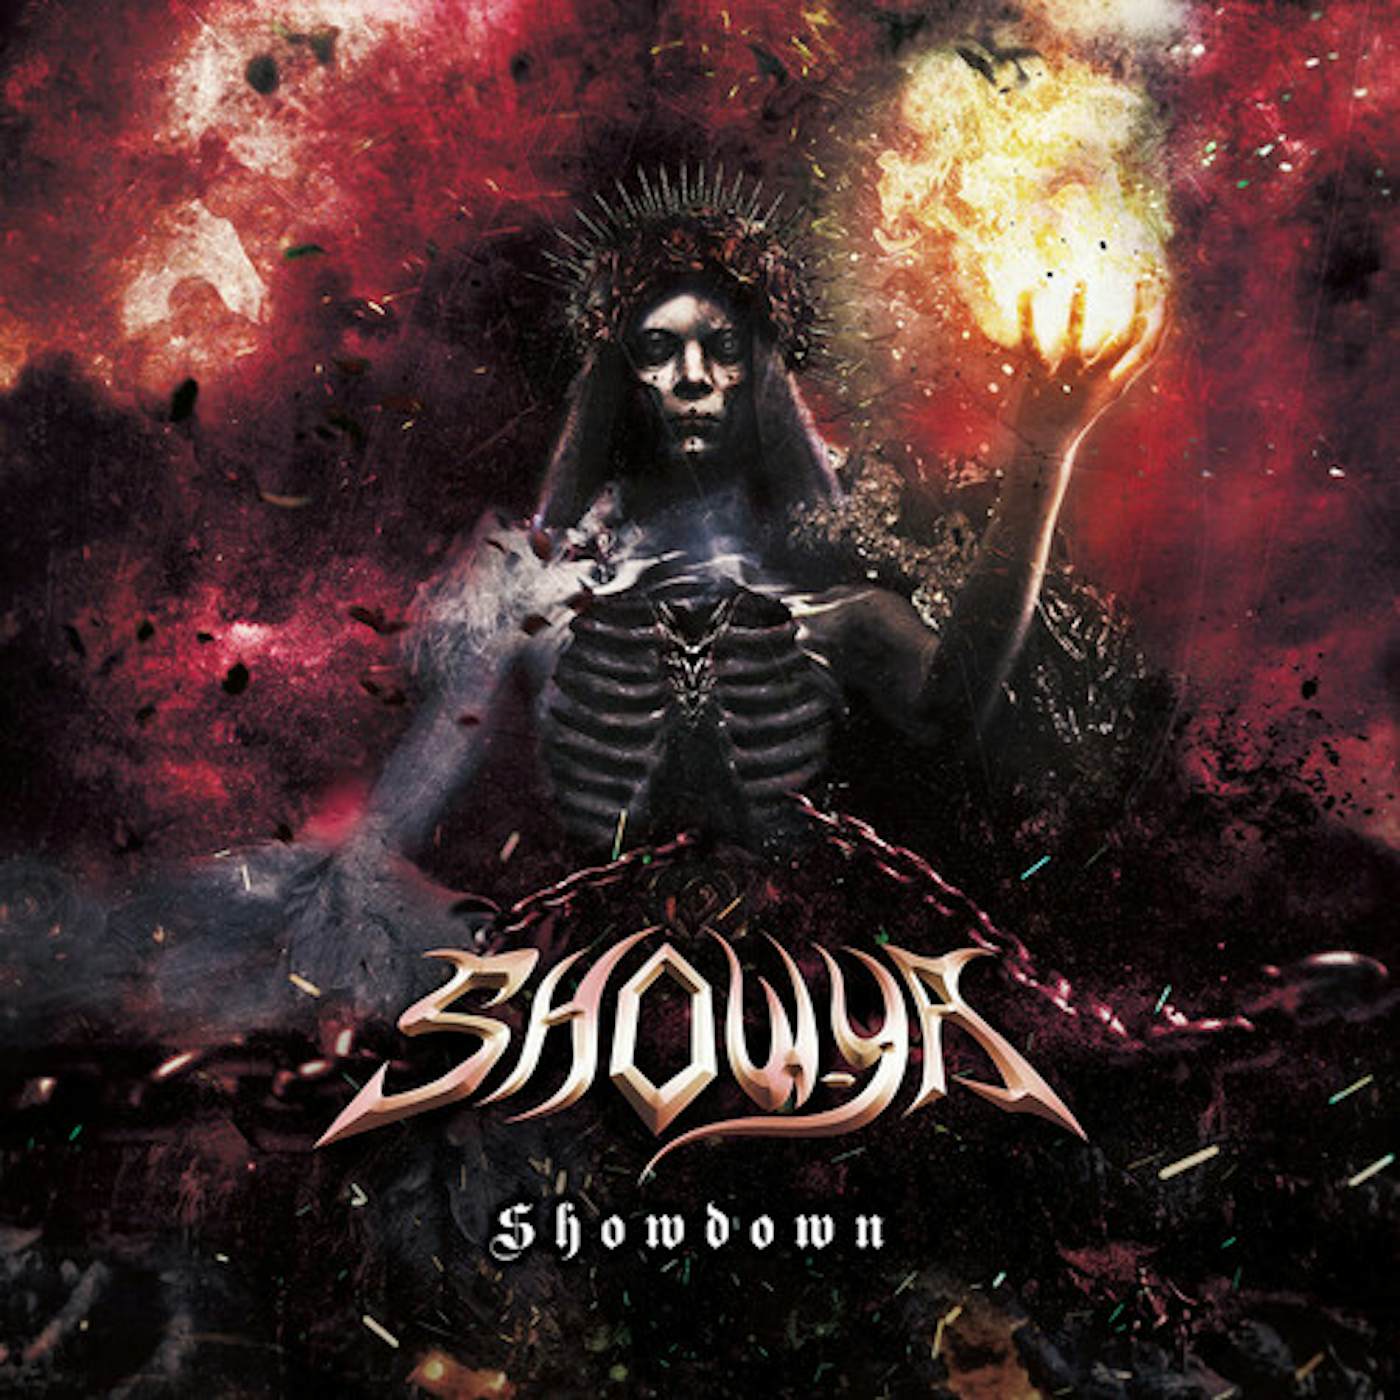 SHOW-YA SHOWDOWN CD